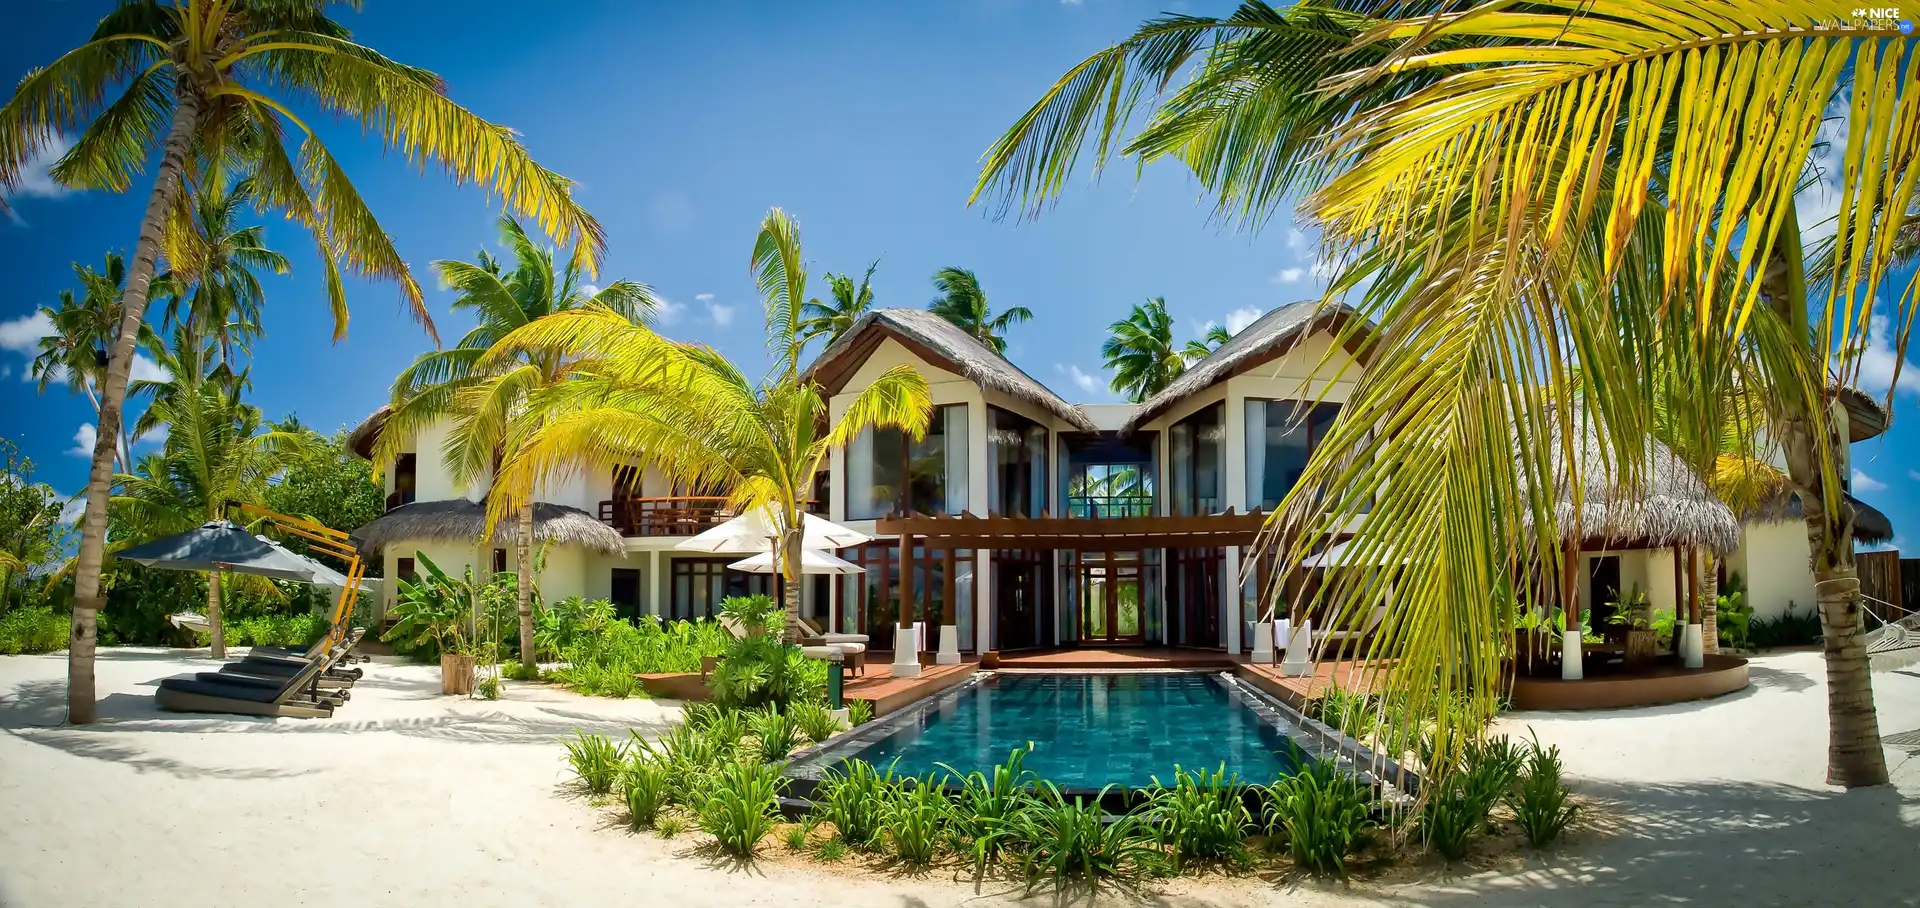 house, Palms, Tropical, Pool